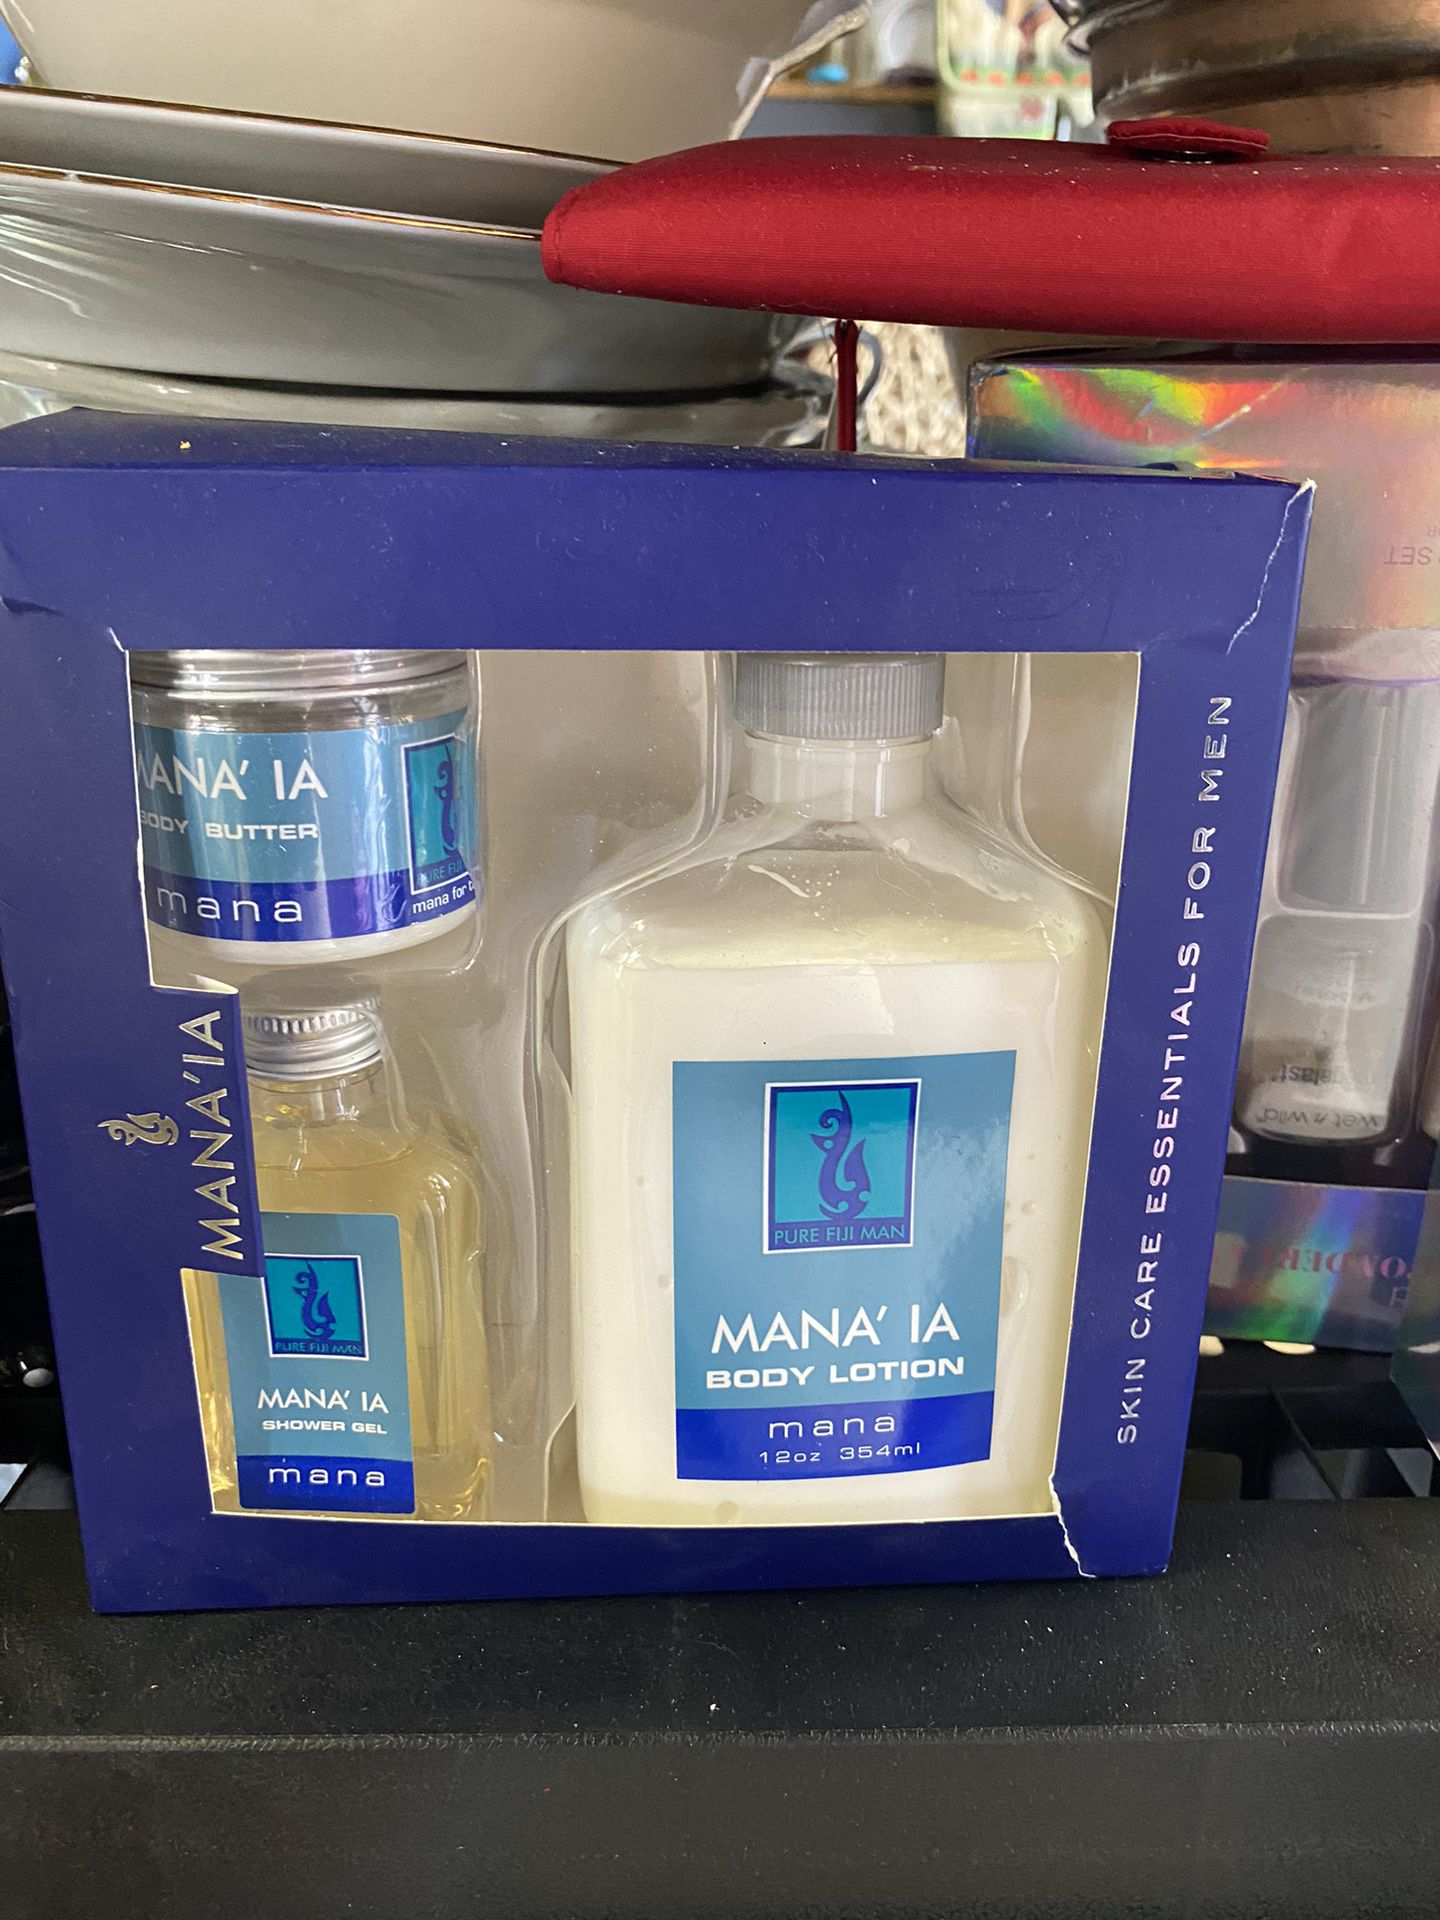 Mana'ia Pure Fiji Man Skin Care for Men Gift Set Lotion Shower Gel Body Butter